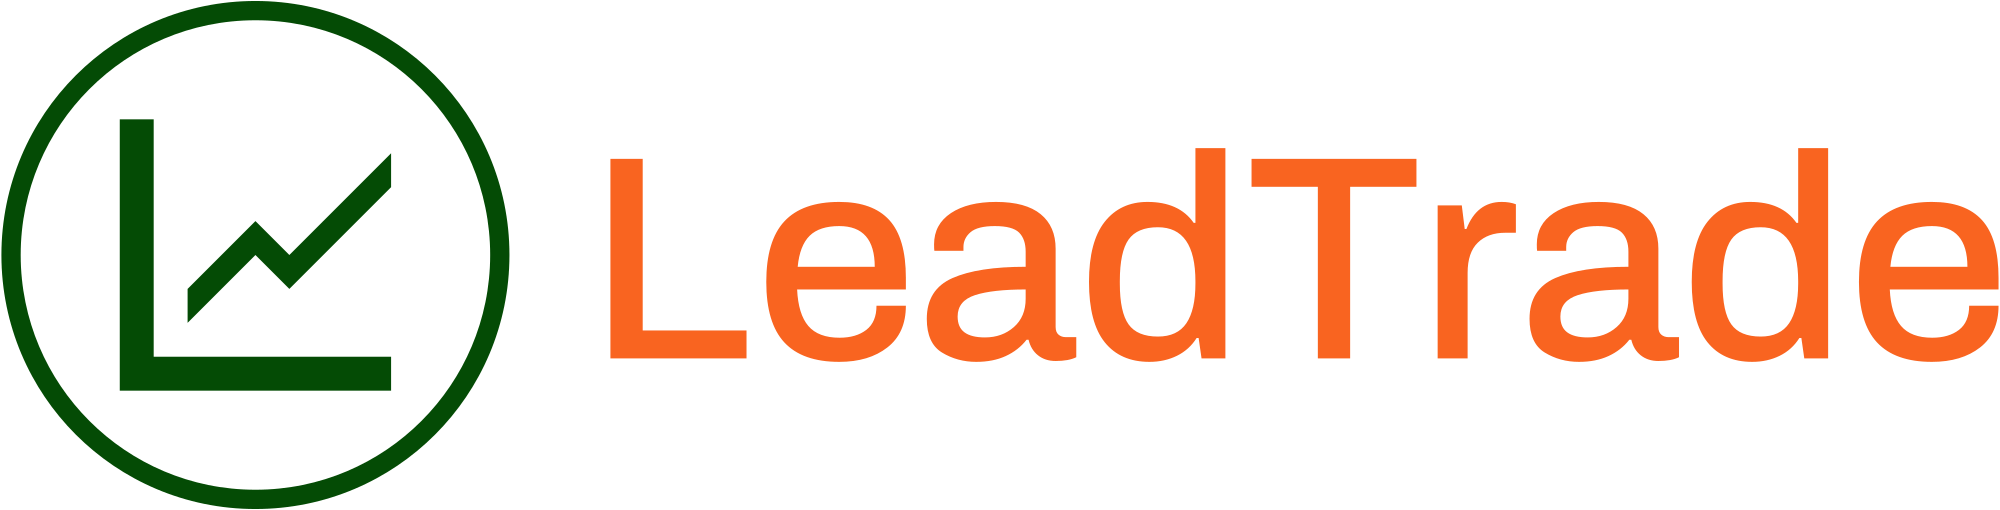 leadtrade | مرجع تخصصی ارز دیجیتال